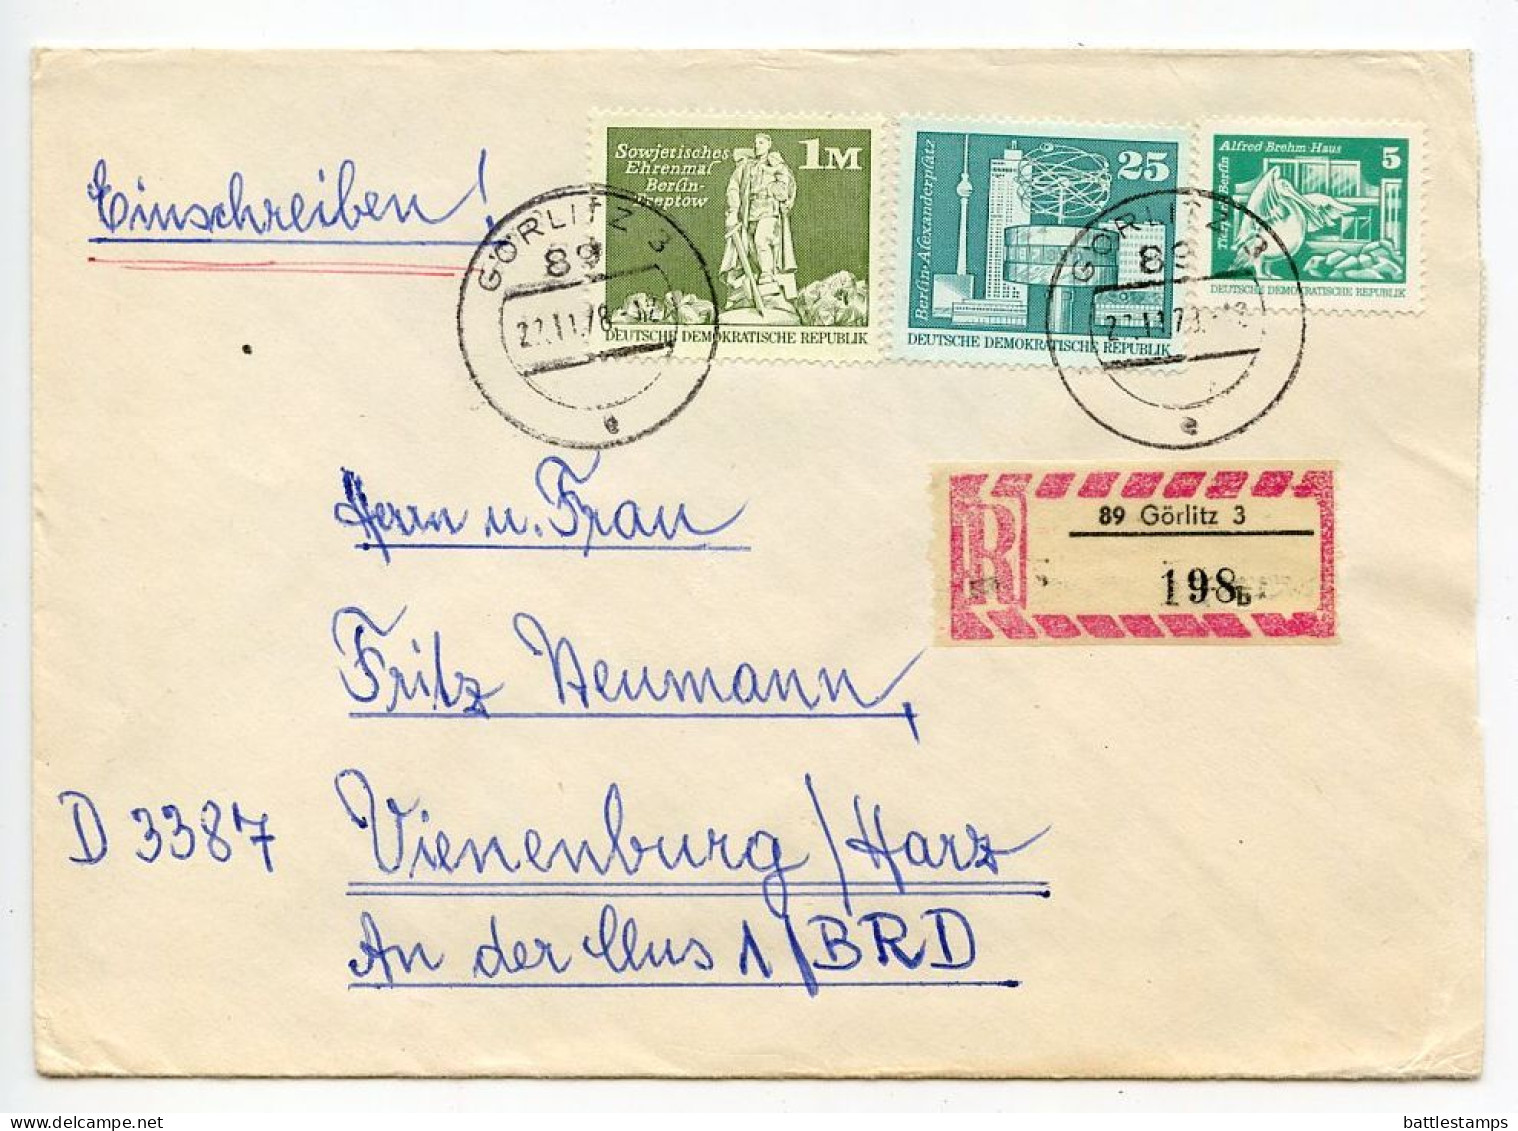 Germany East 1978 Registered Cover; Görlitz To Vienenburg; Mix Of Stamps; Tauschsendung Exchange Control Label - Storia Postale